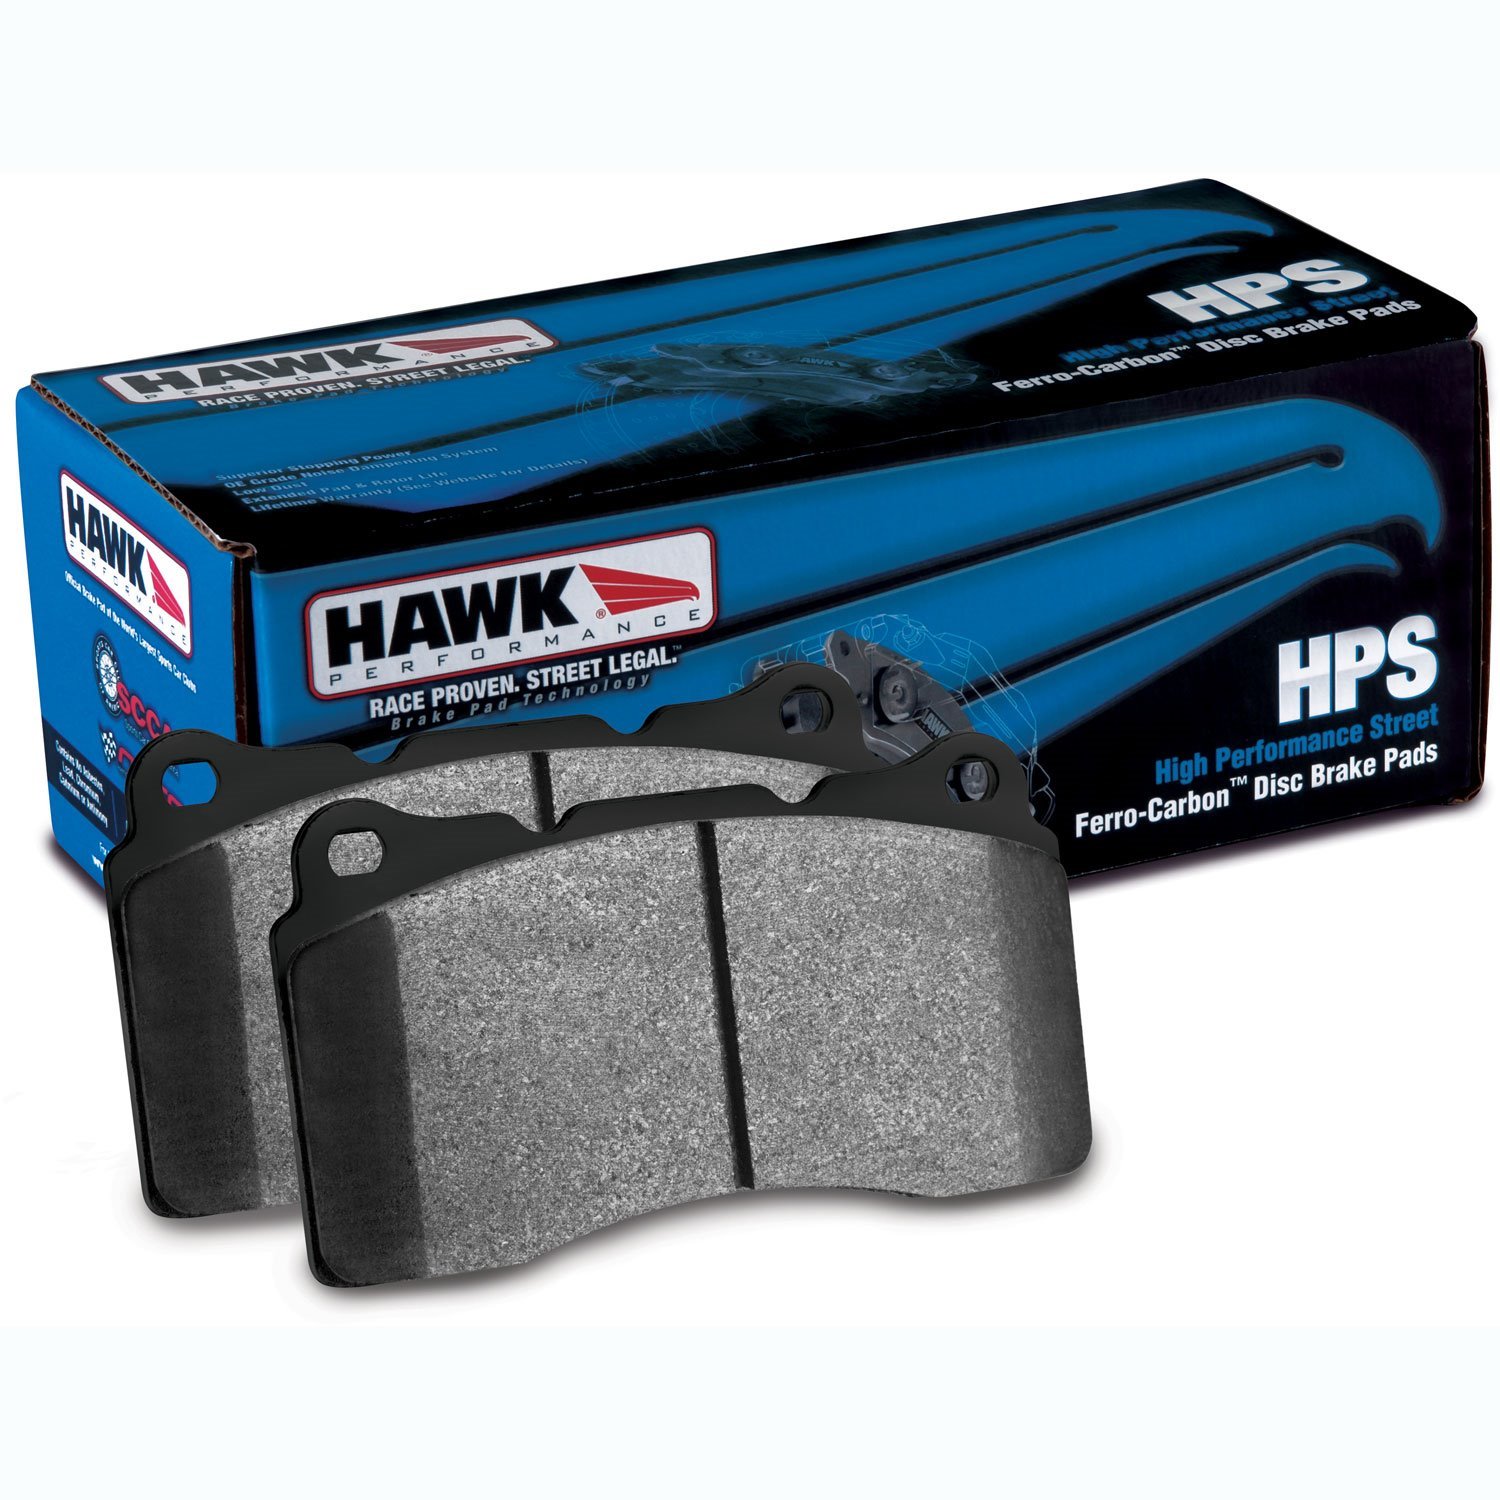 Hawk High Performance Rear Brake Pads Fits: 2002 Impreza WRX